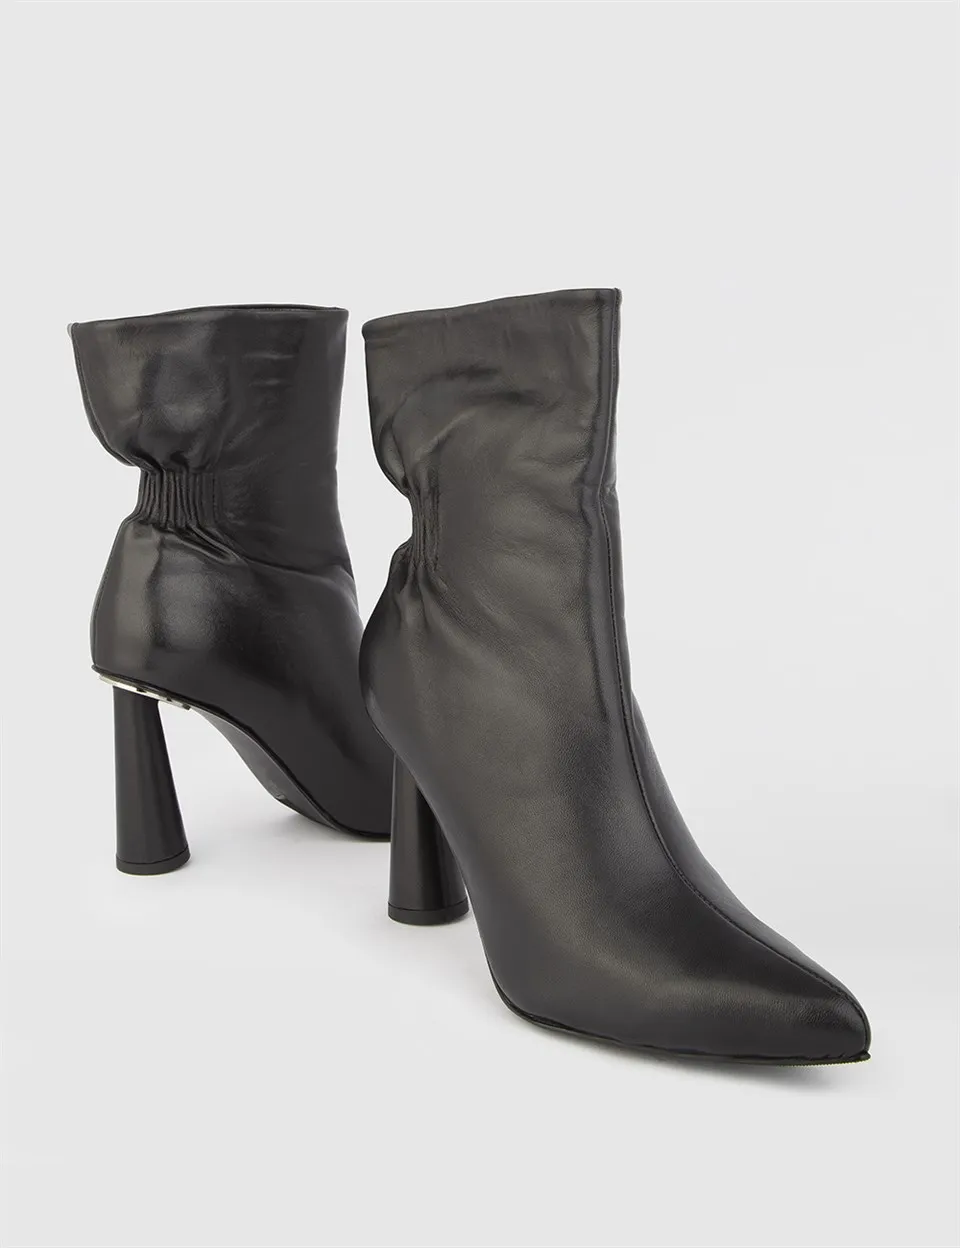 

ILVi-Genuine Leather Handmade Dera Black Leather Women's Heeled Boot Women Shoes 2021 Fall/Winter